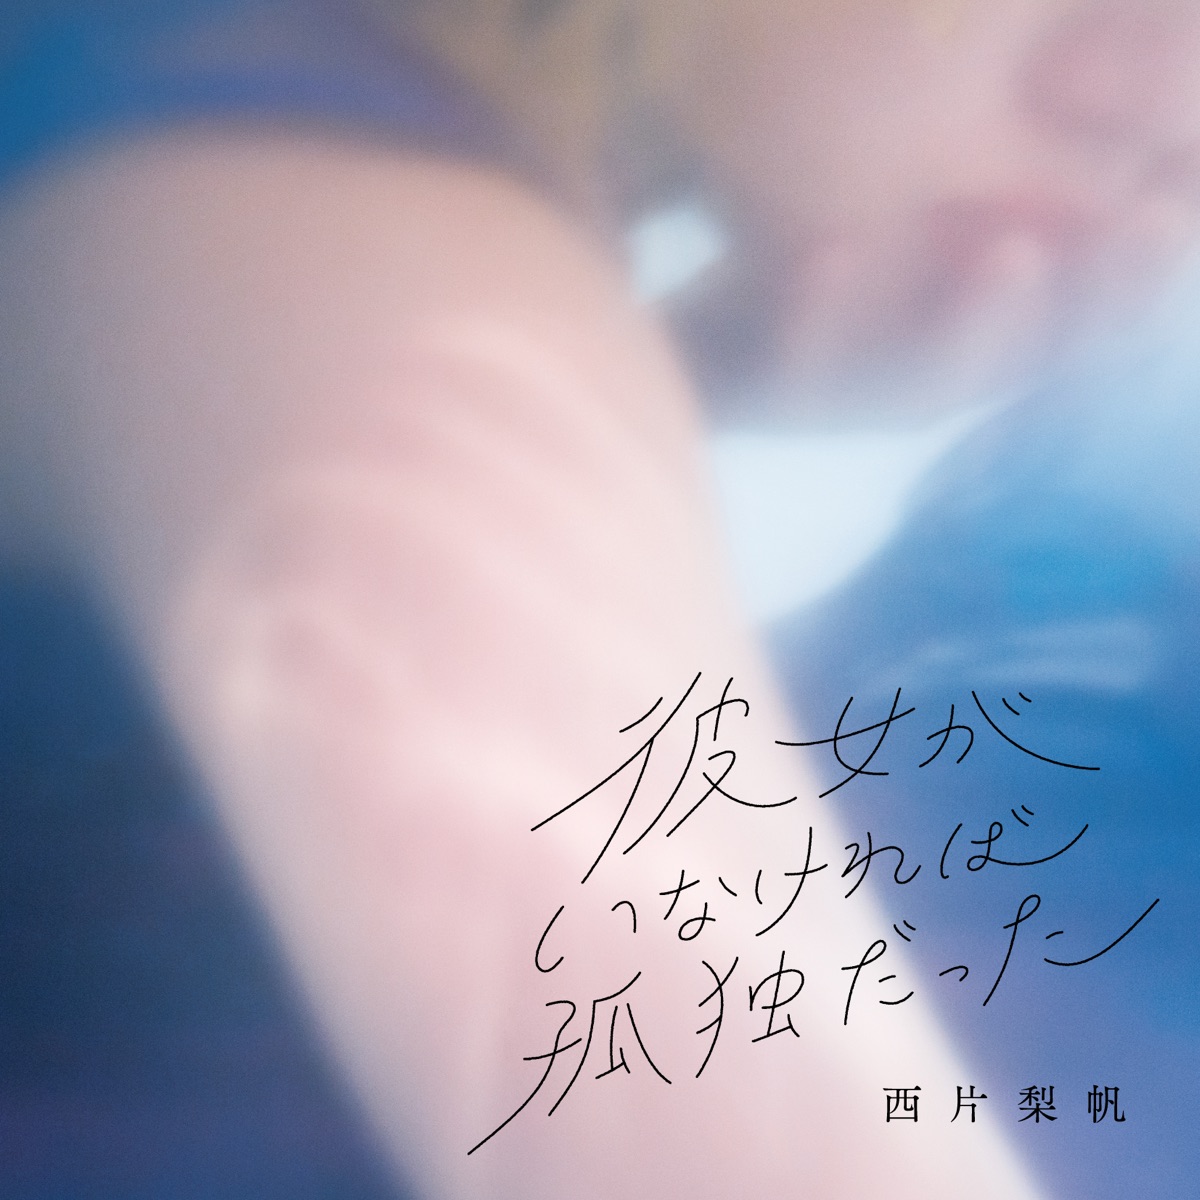 Cover art for『riho nishikata - 黒いエレキ』from the release『Kanojo ga Inakereba Kodoku Datta